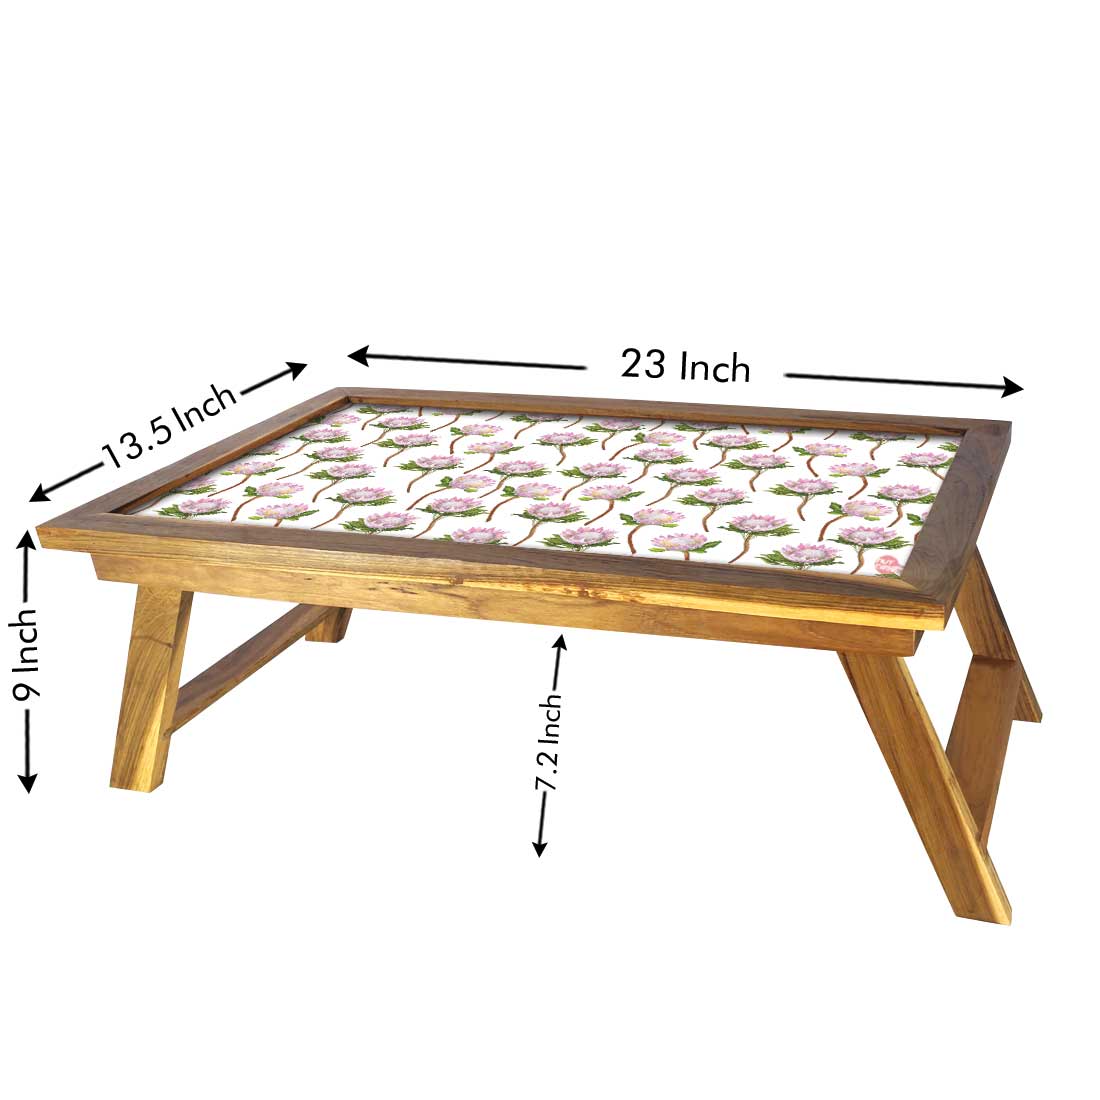 Wooden Designer Bed and Breakfast Table for Study Desk - Flower Buds Nutcase